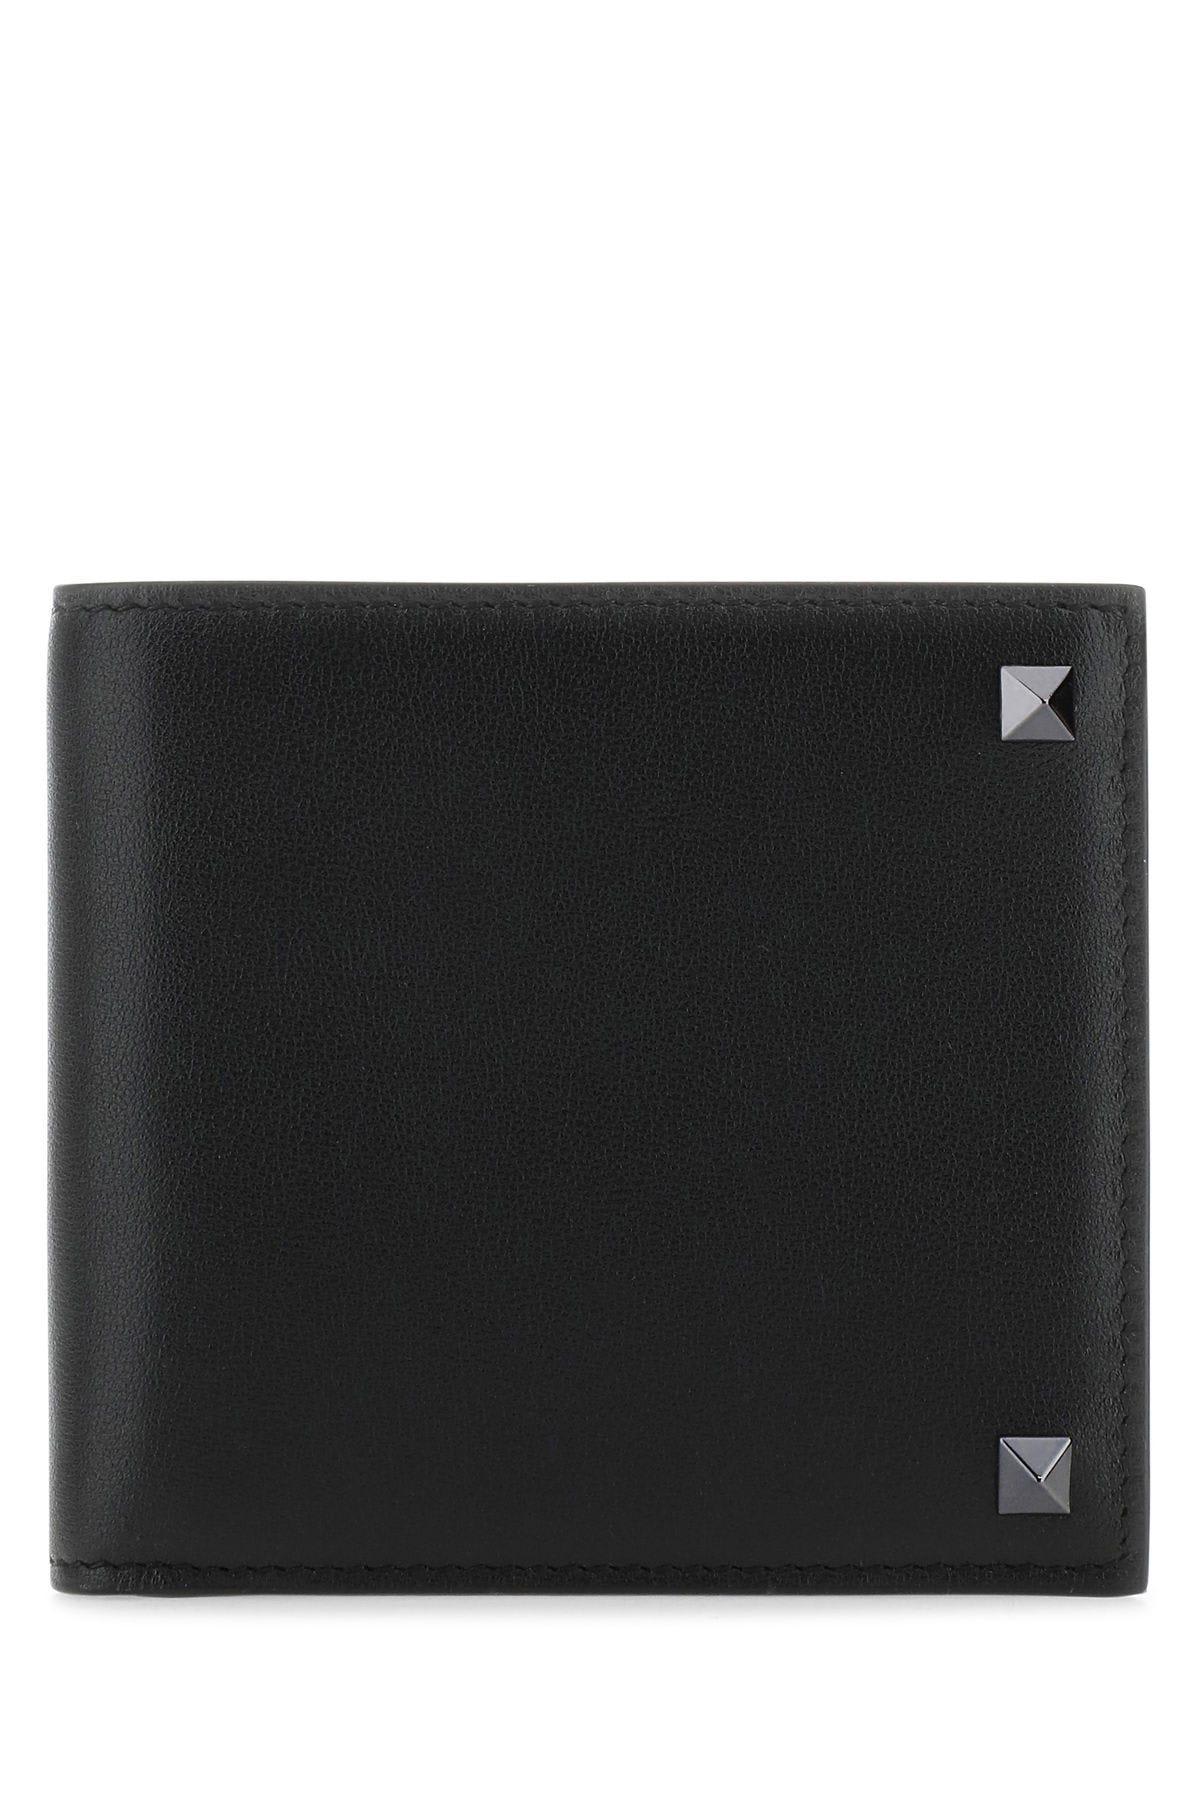 Valentino Black Leather Wallet